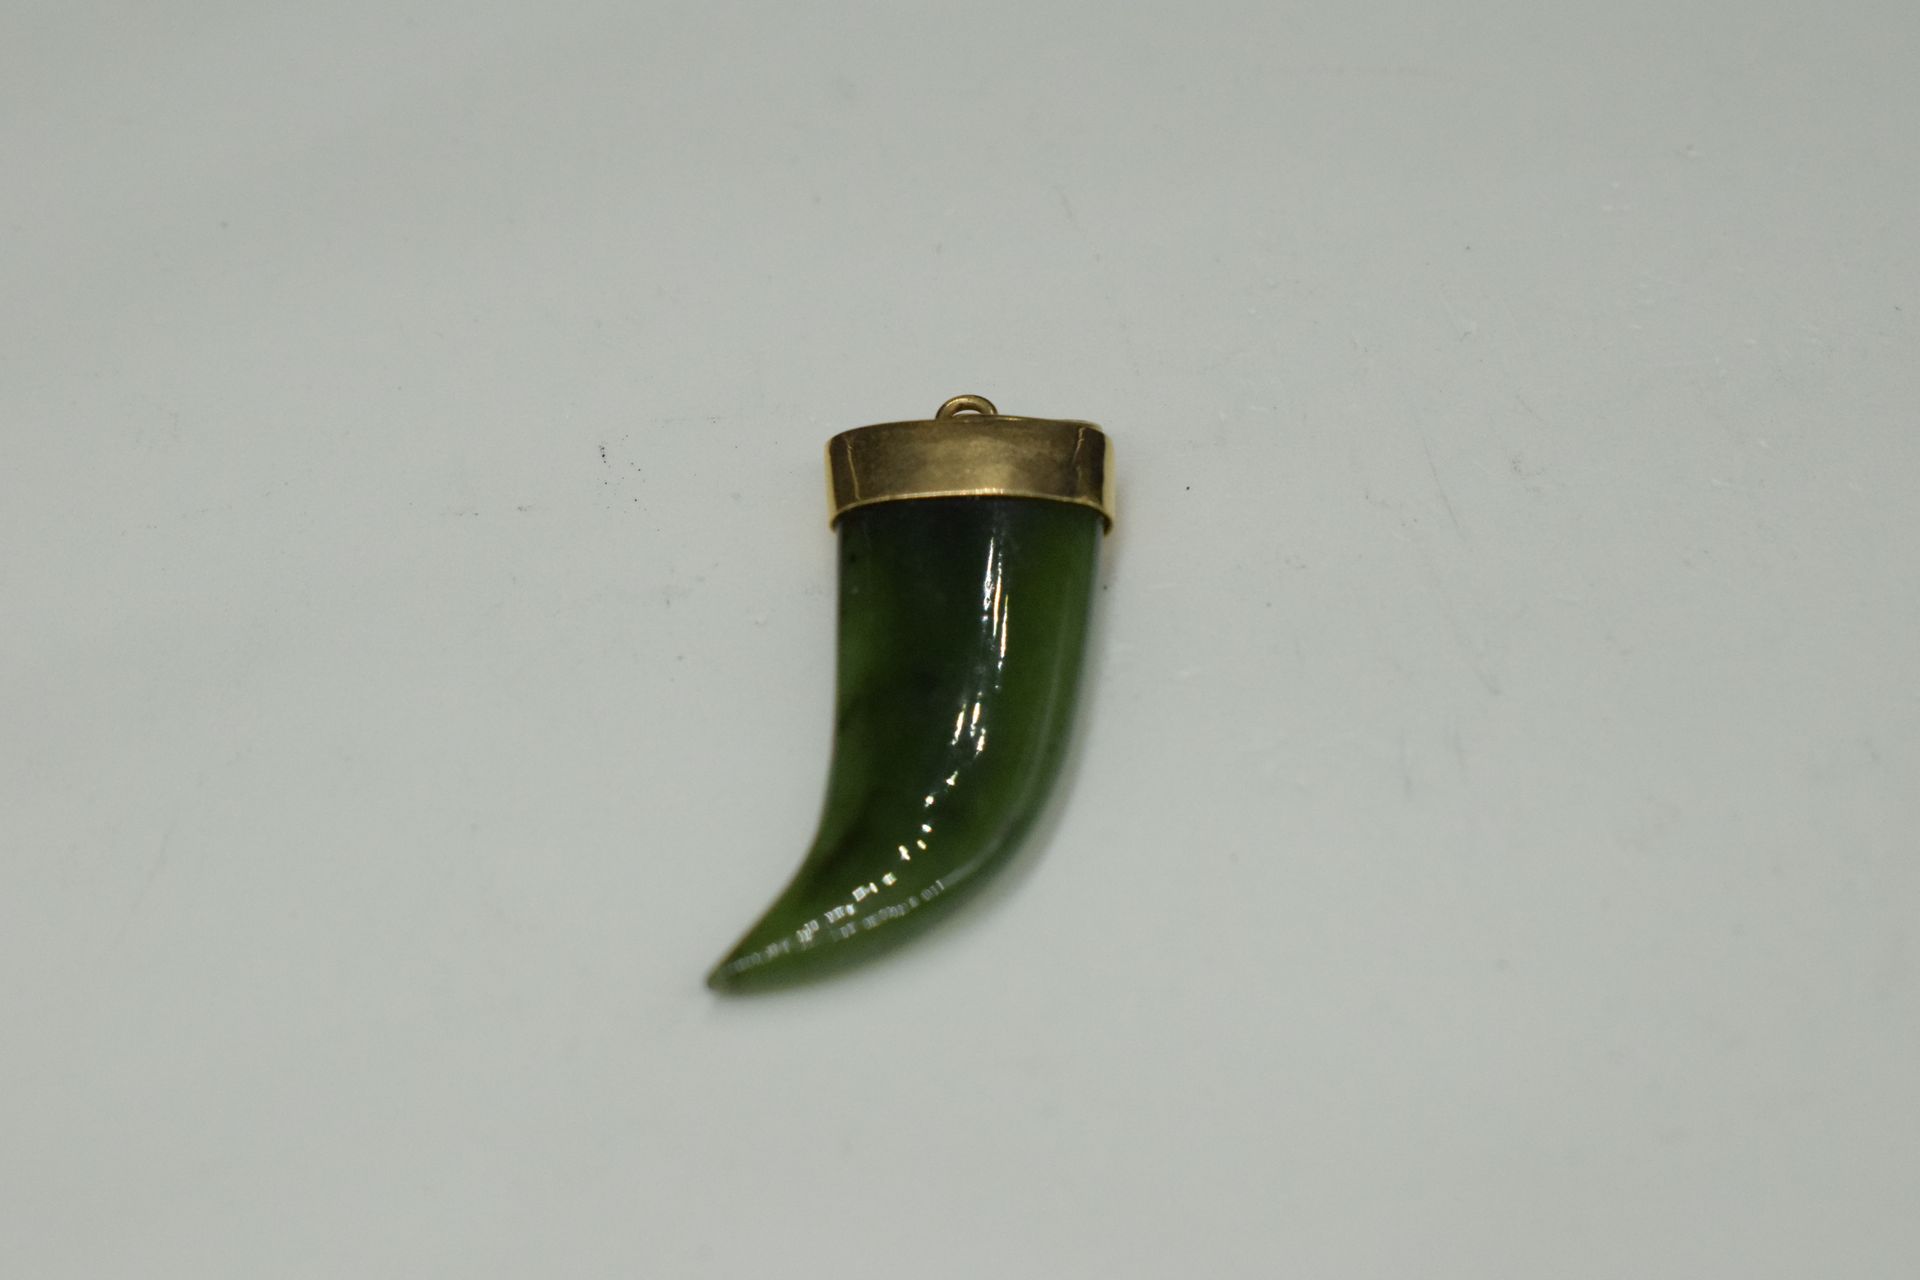 Null Pendentif en or jaune 18K (750) orné de jade.
Ht. : 3.5 cm - Poids brut : 6&hellip;